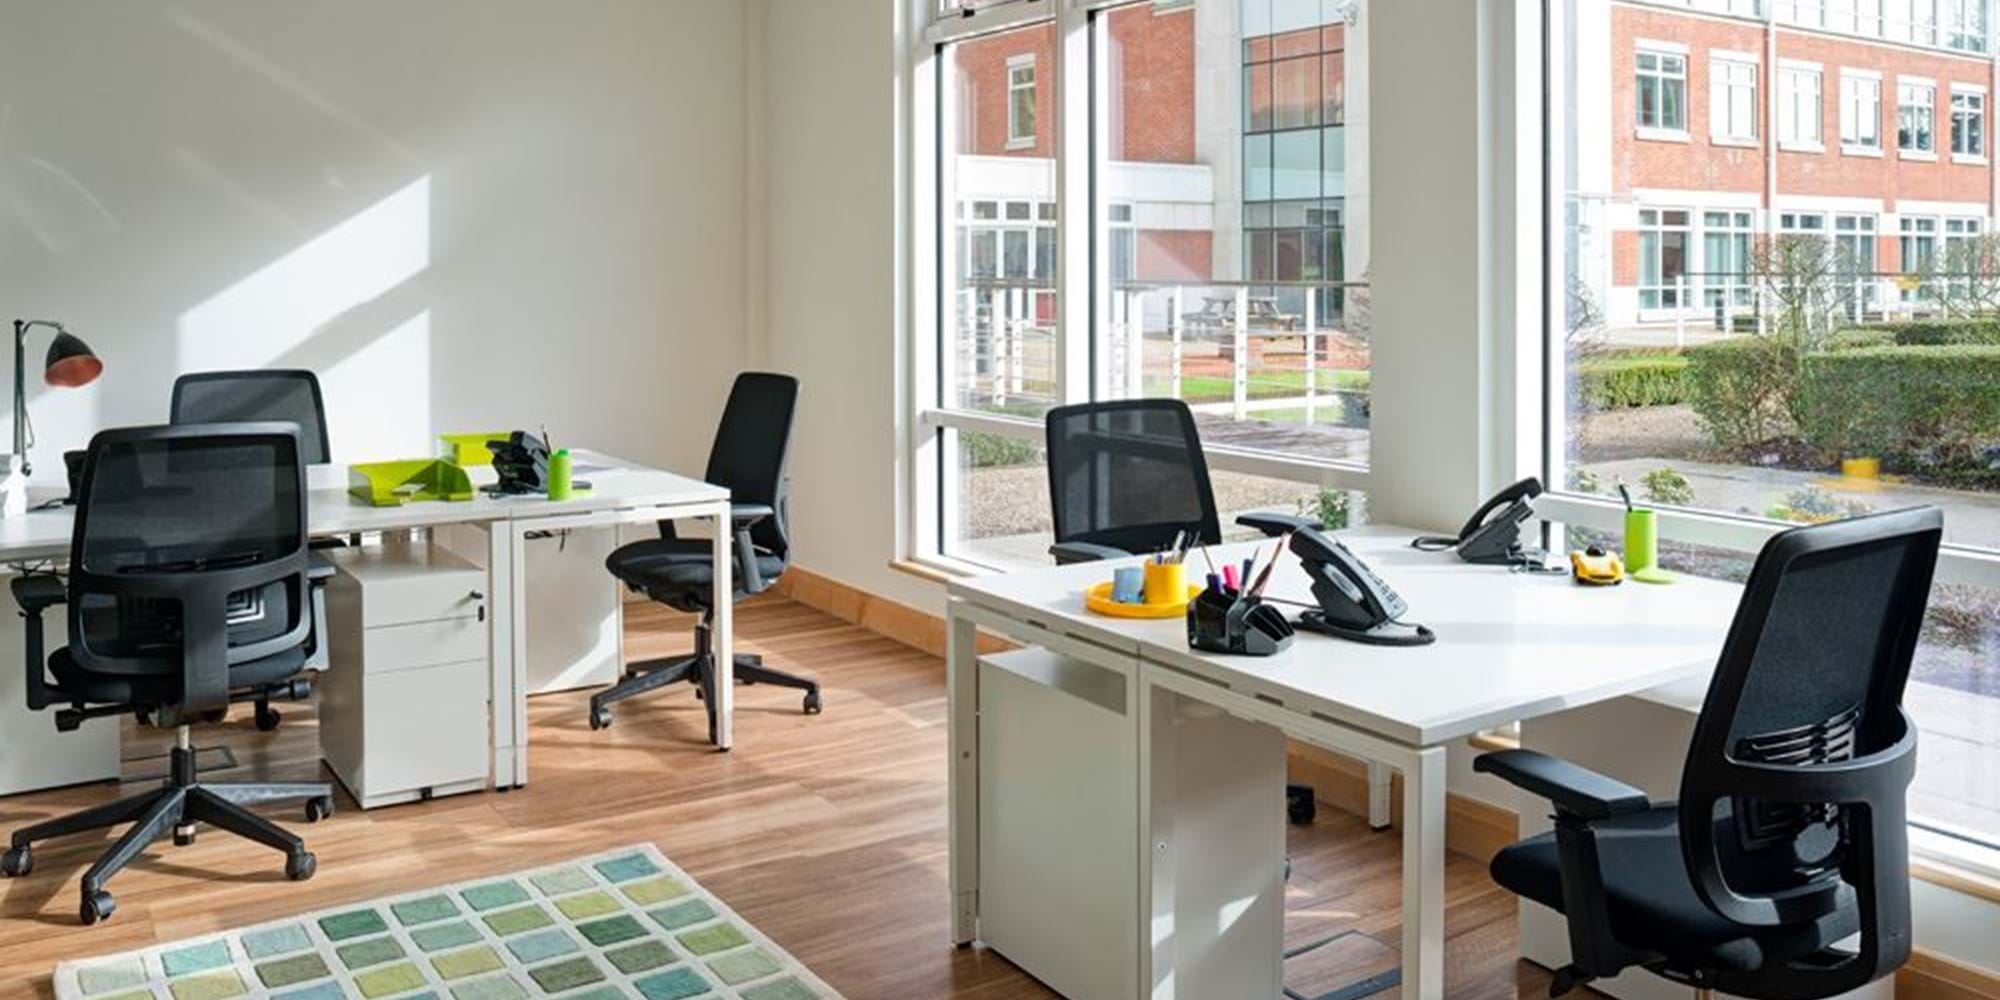 Modus Workspace office design, fit out and refurbishment - Regus Gerrards Cross - Spaces Chalfont 07 highres jpg.jpg